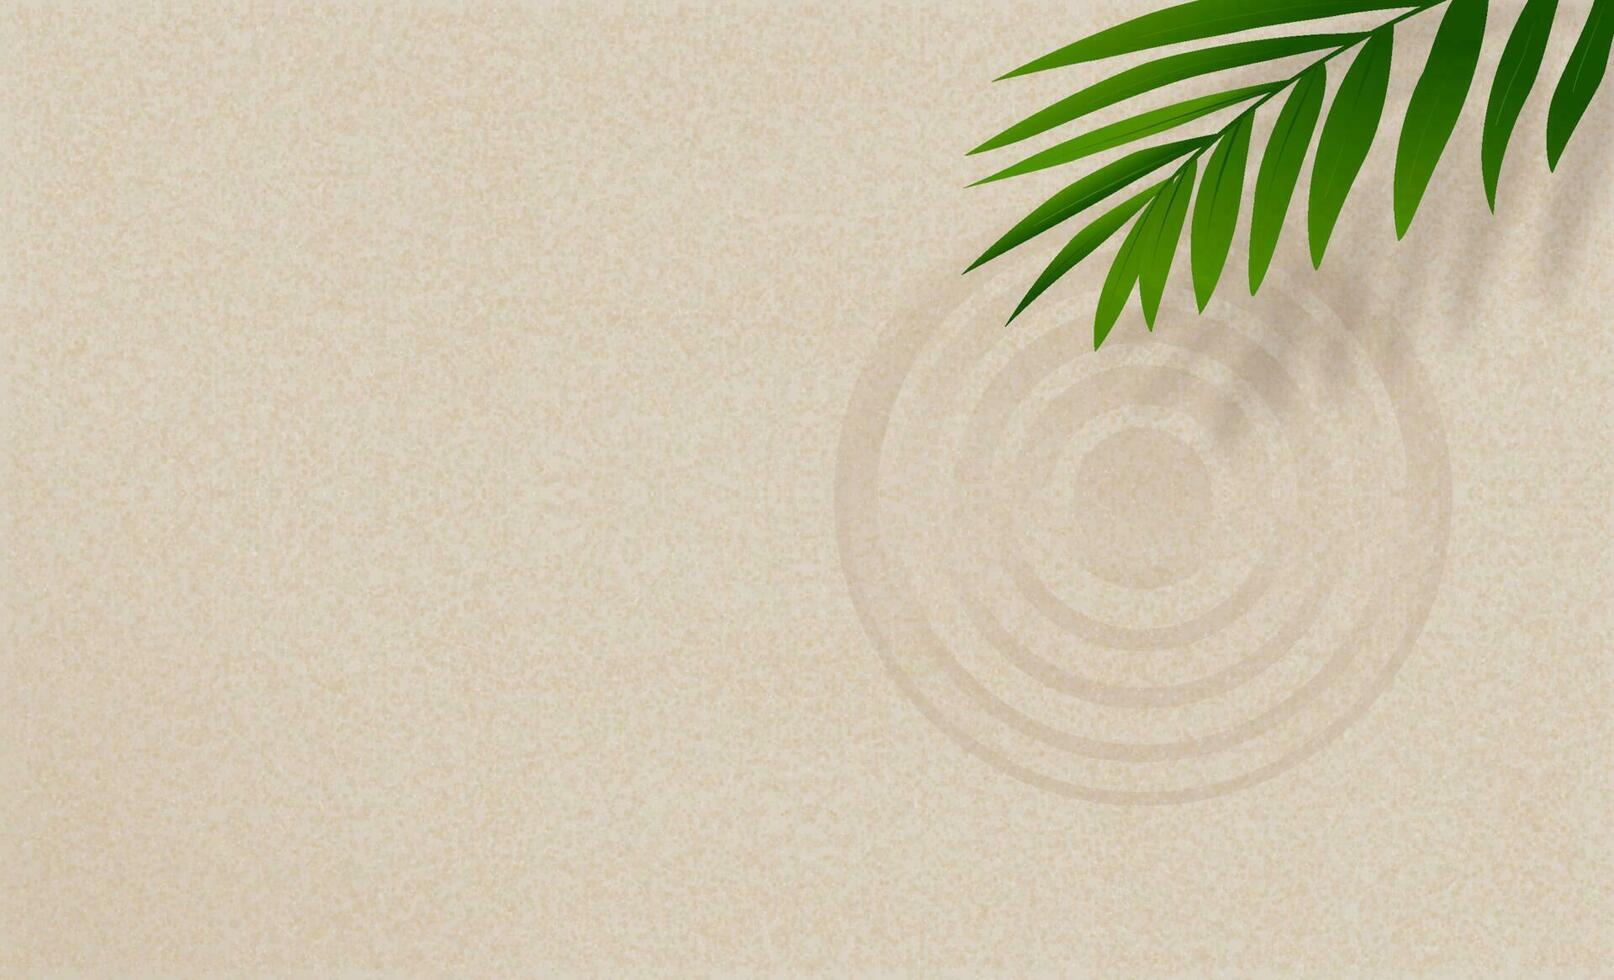 zen arena modelo con palma hojas, zen jardín con círculos líneas rastrillado en suave arenoso superficie fondo,armonía,meditación,zen me gusta concepto, arena playa textura con sencillo espiritual en verano playa vector